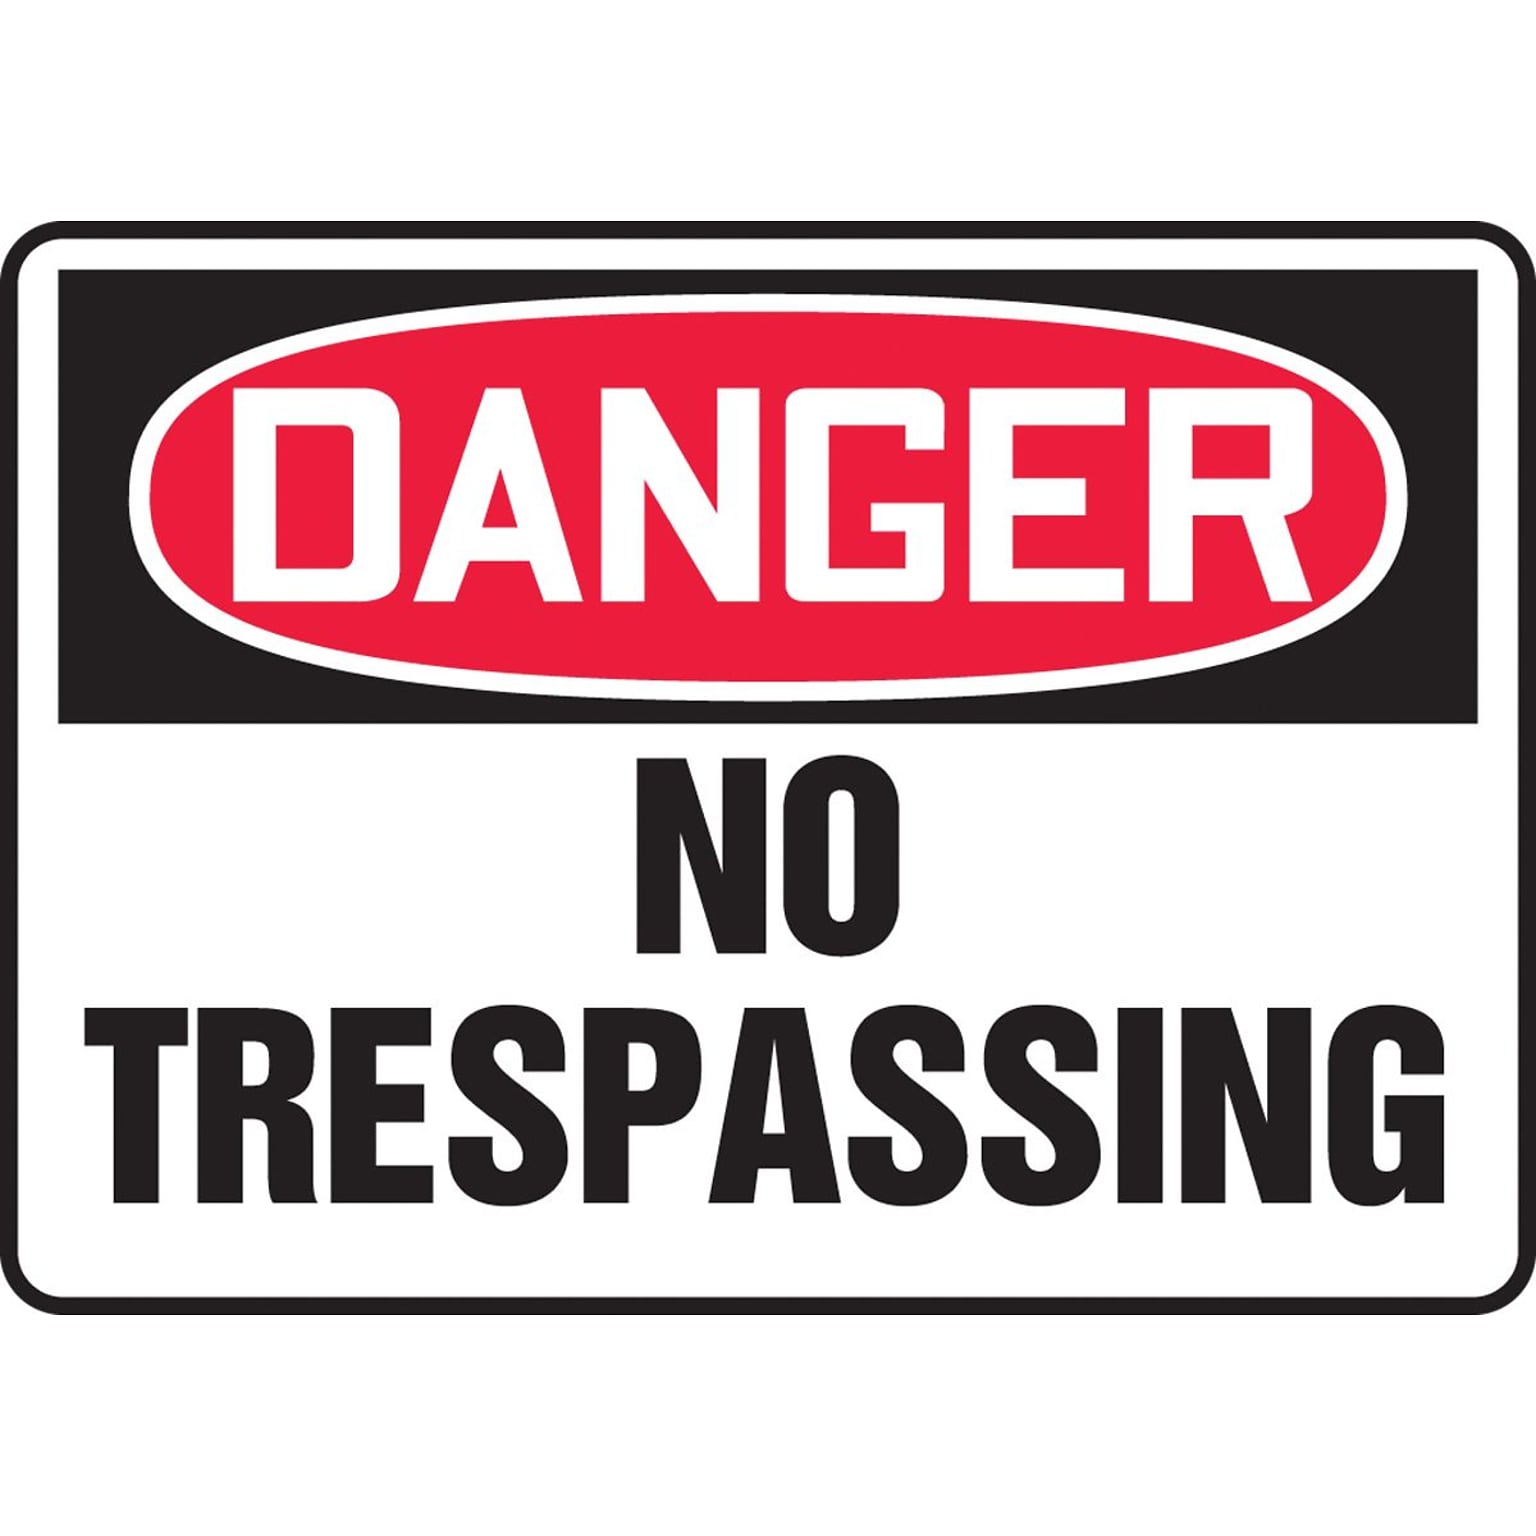 Accuform 10 x 14 Aluminum Safety Sign DANGER NO TRESPASSING, Red/Black On White (MADM076VA)